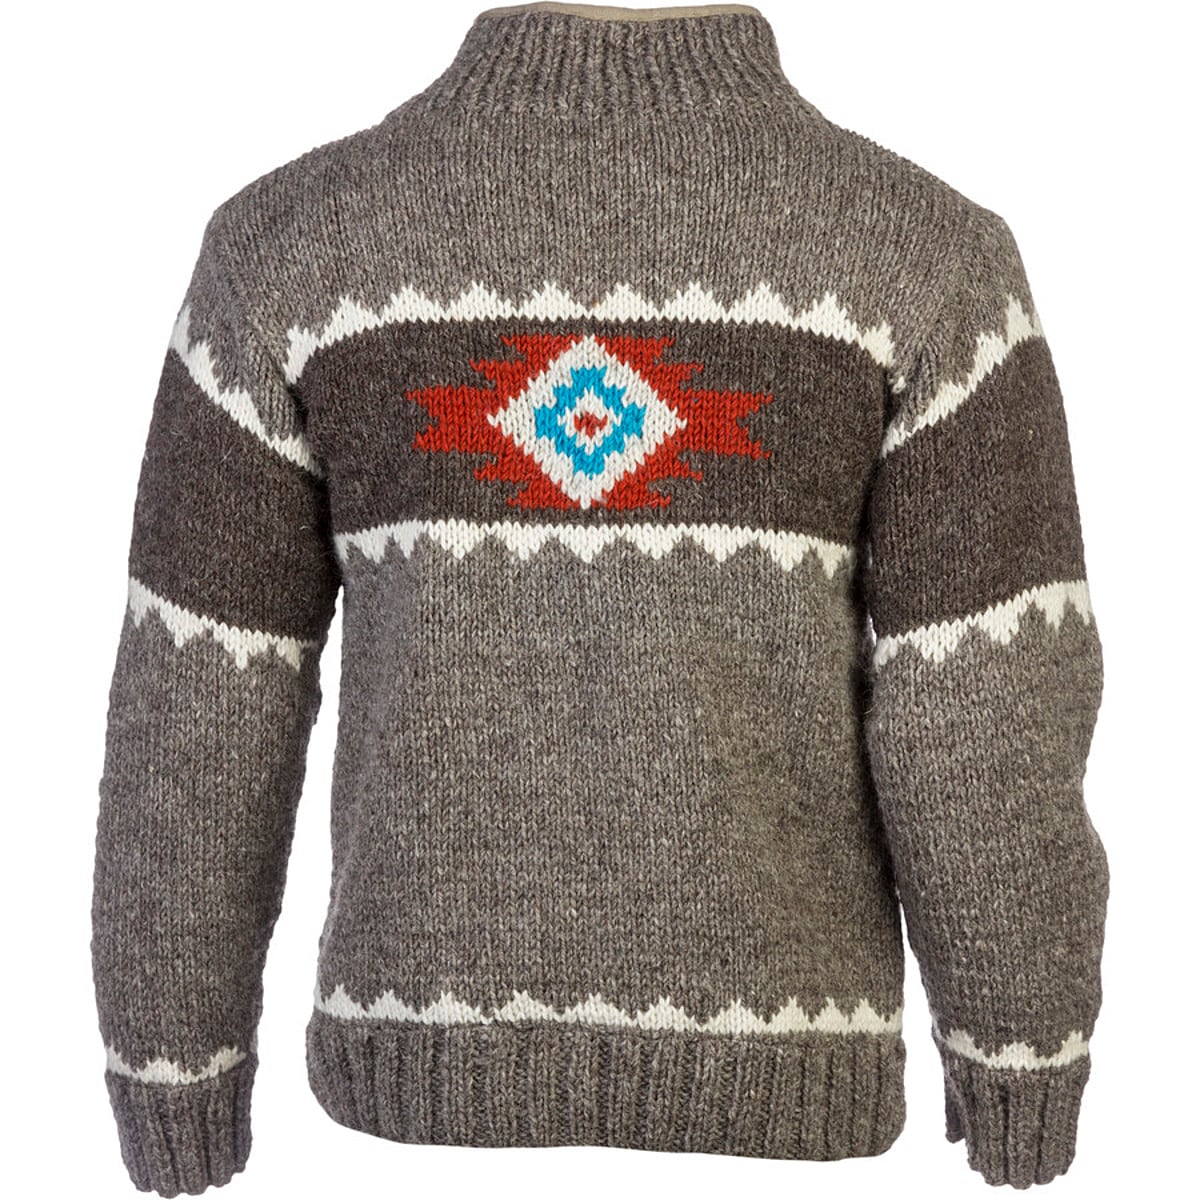 Laundromat Navajo Sweater - Men's | eBay